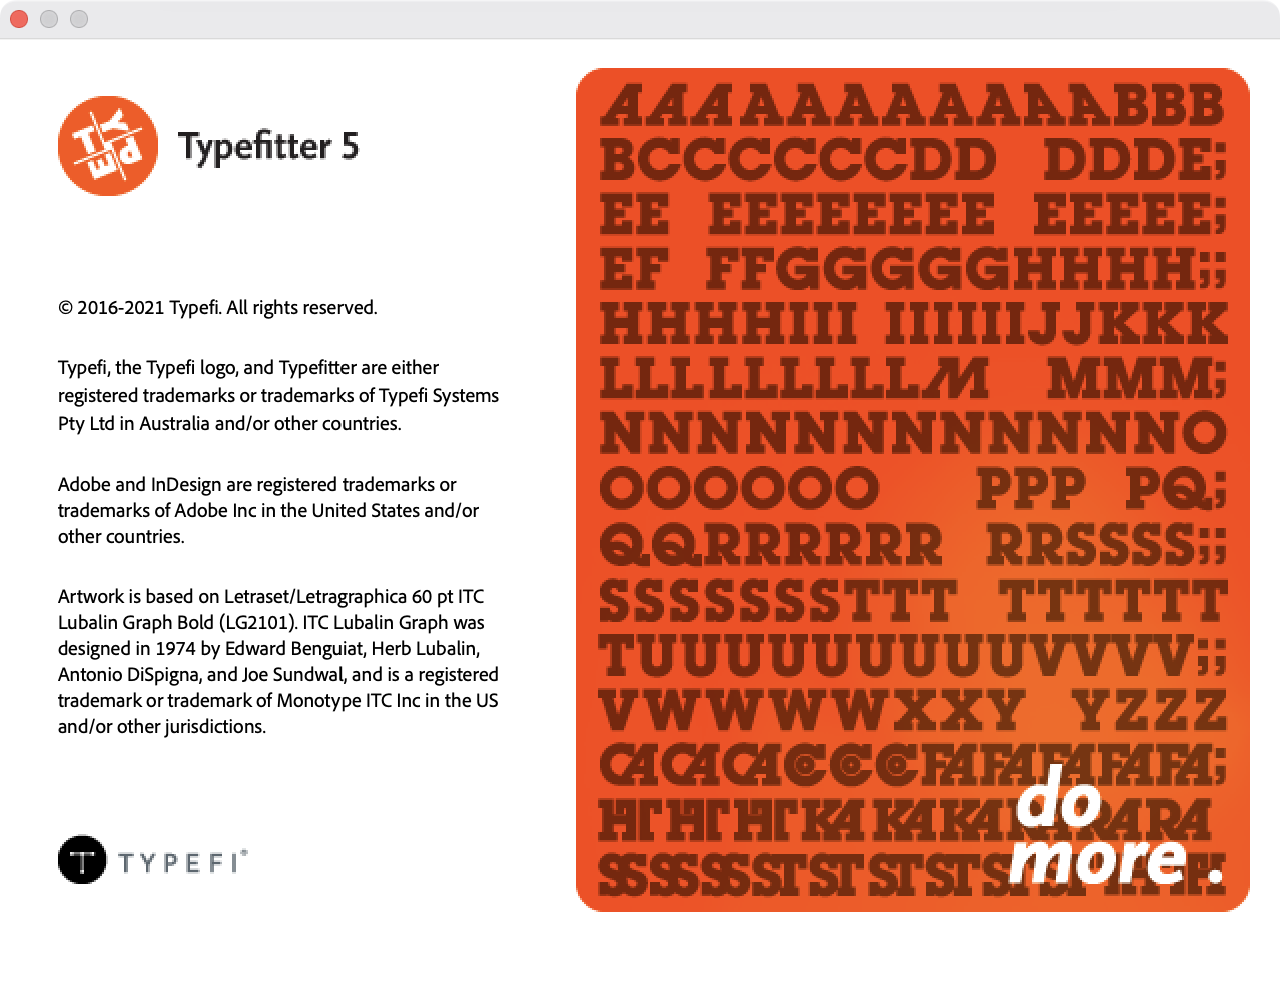 Typefitter 5 splash screen